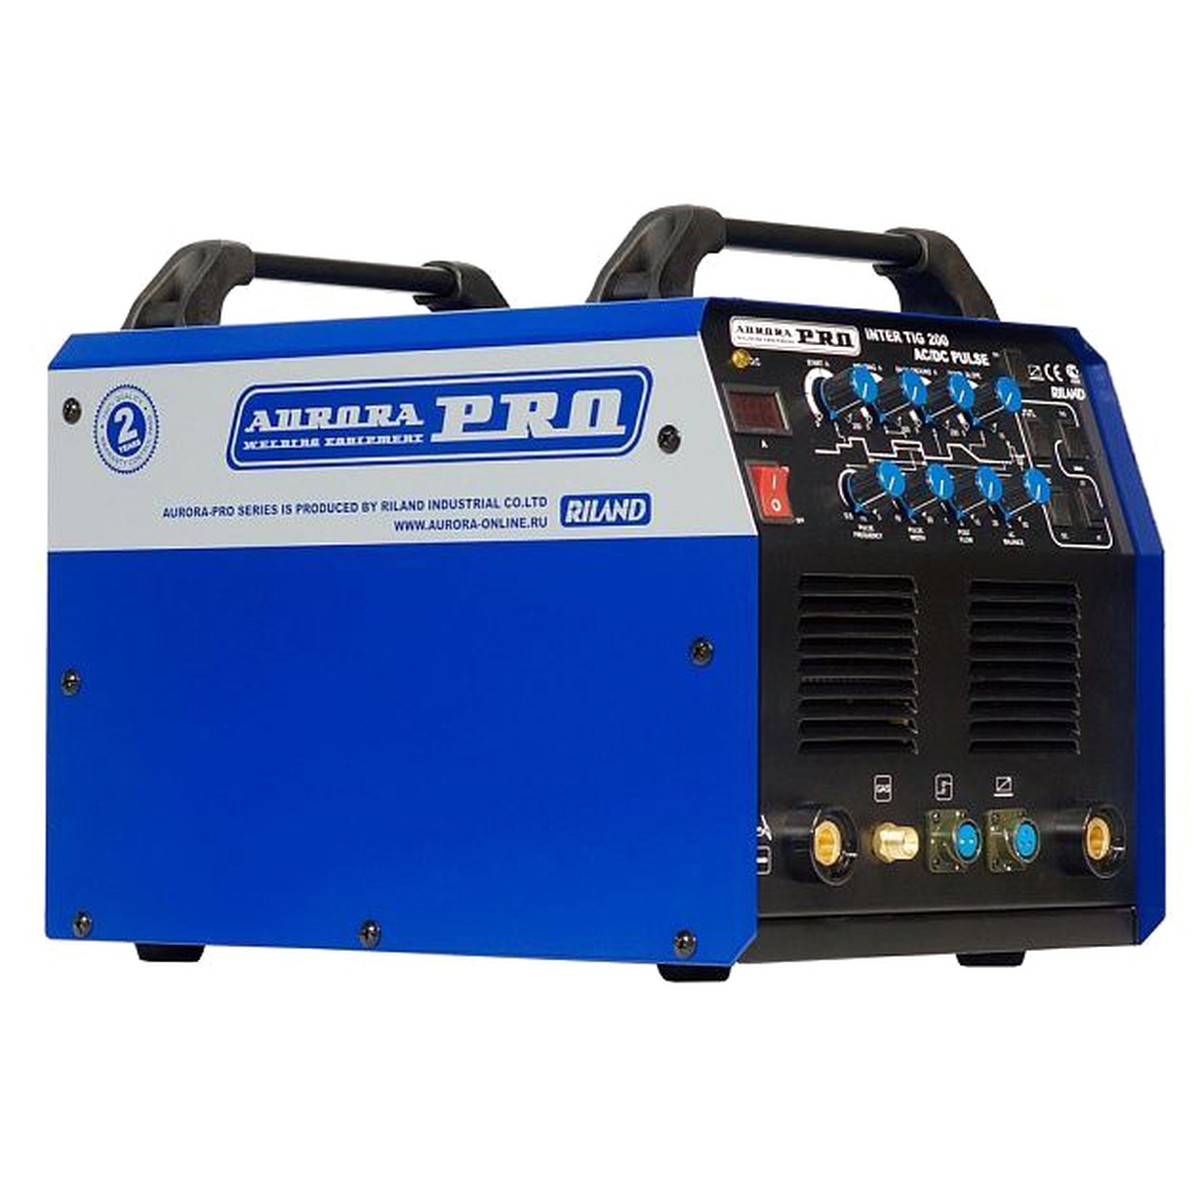 Pro inter tig 200 pulse. Aurora Pro Inter Tig 200 AC/DC Pulse. Aurora Pro Tig 200 AC/DC Pulse. Aurora Inter Tig 200 AC/DC.